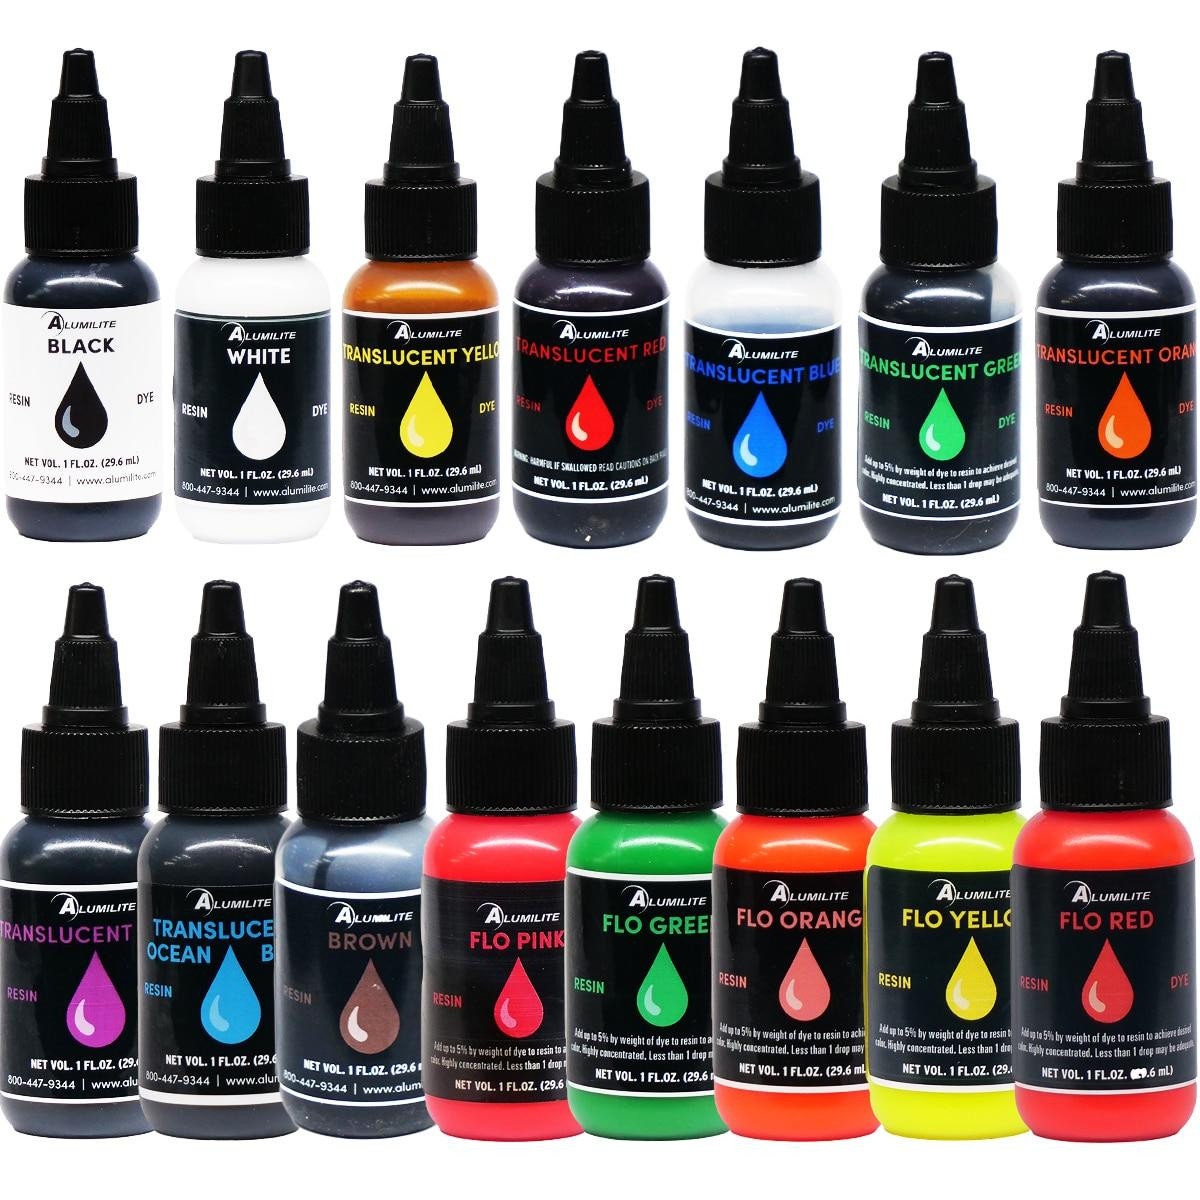 Keda Dye 5 Color Liquid Dye Kit Contains 5 Alcohol Dye Colors in